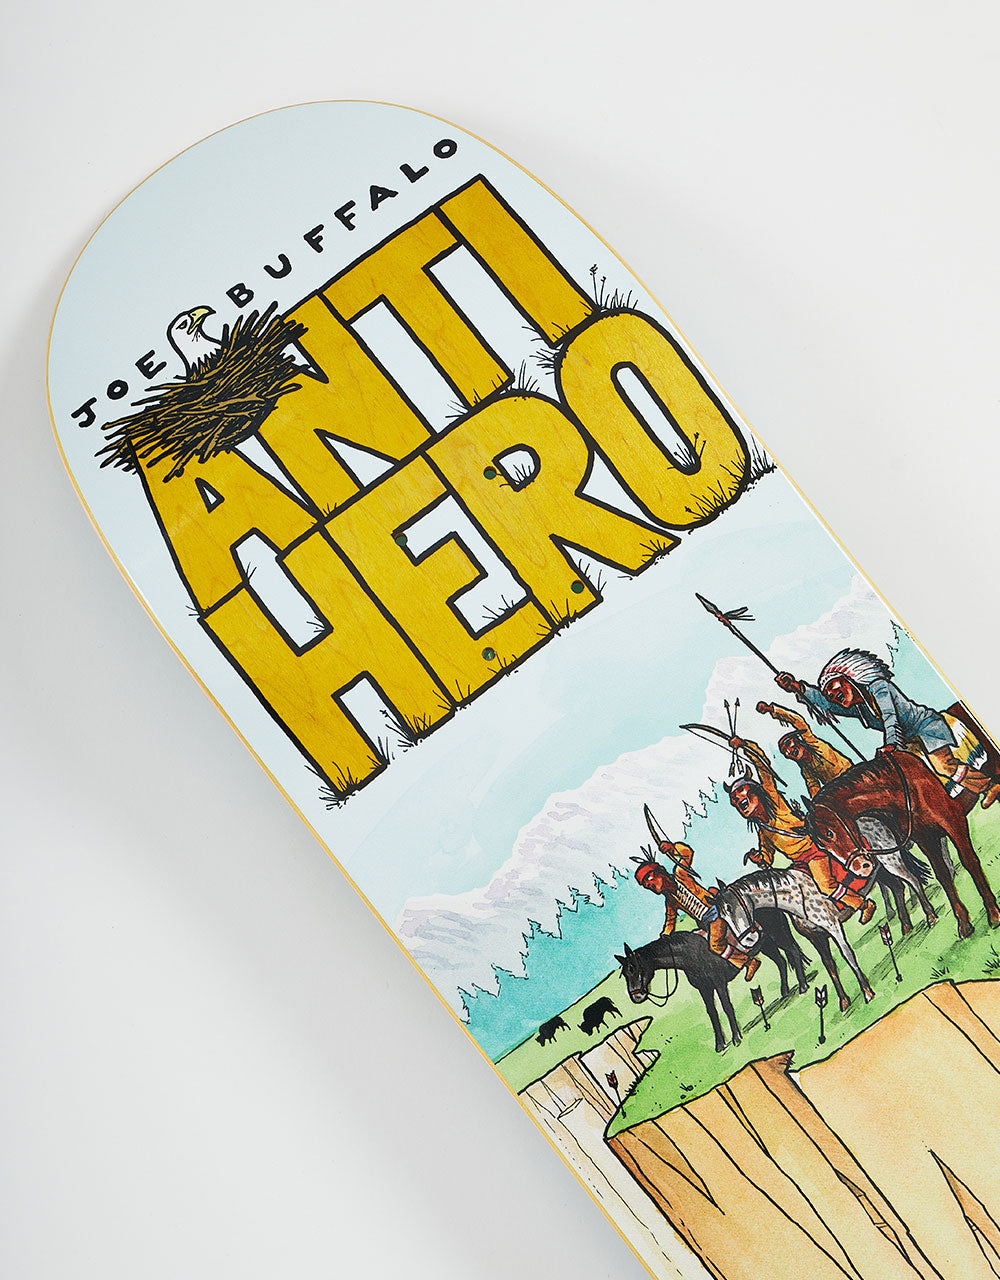 Anti Hero x Joe Buffalo Skateboard Deck - 8.75"